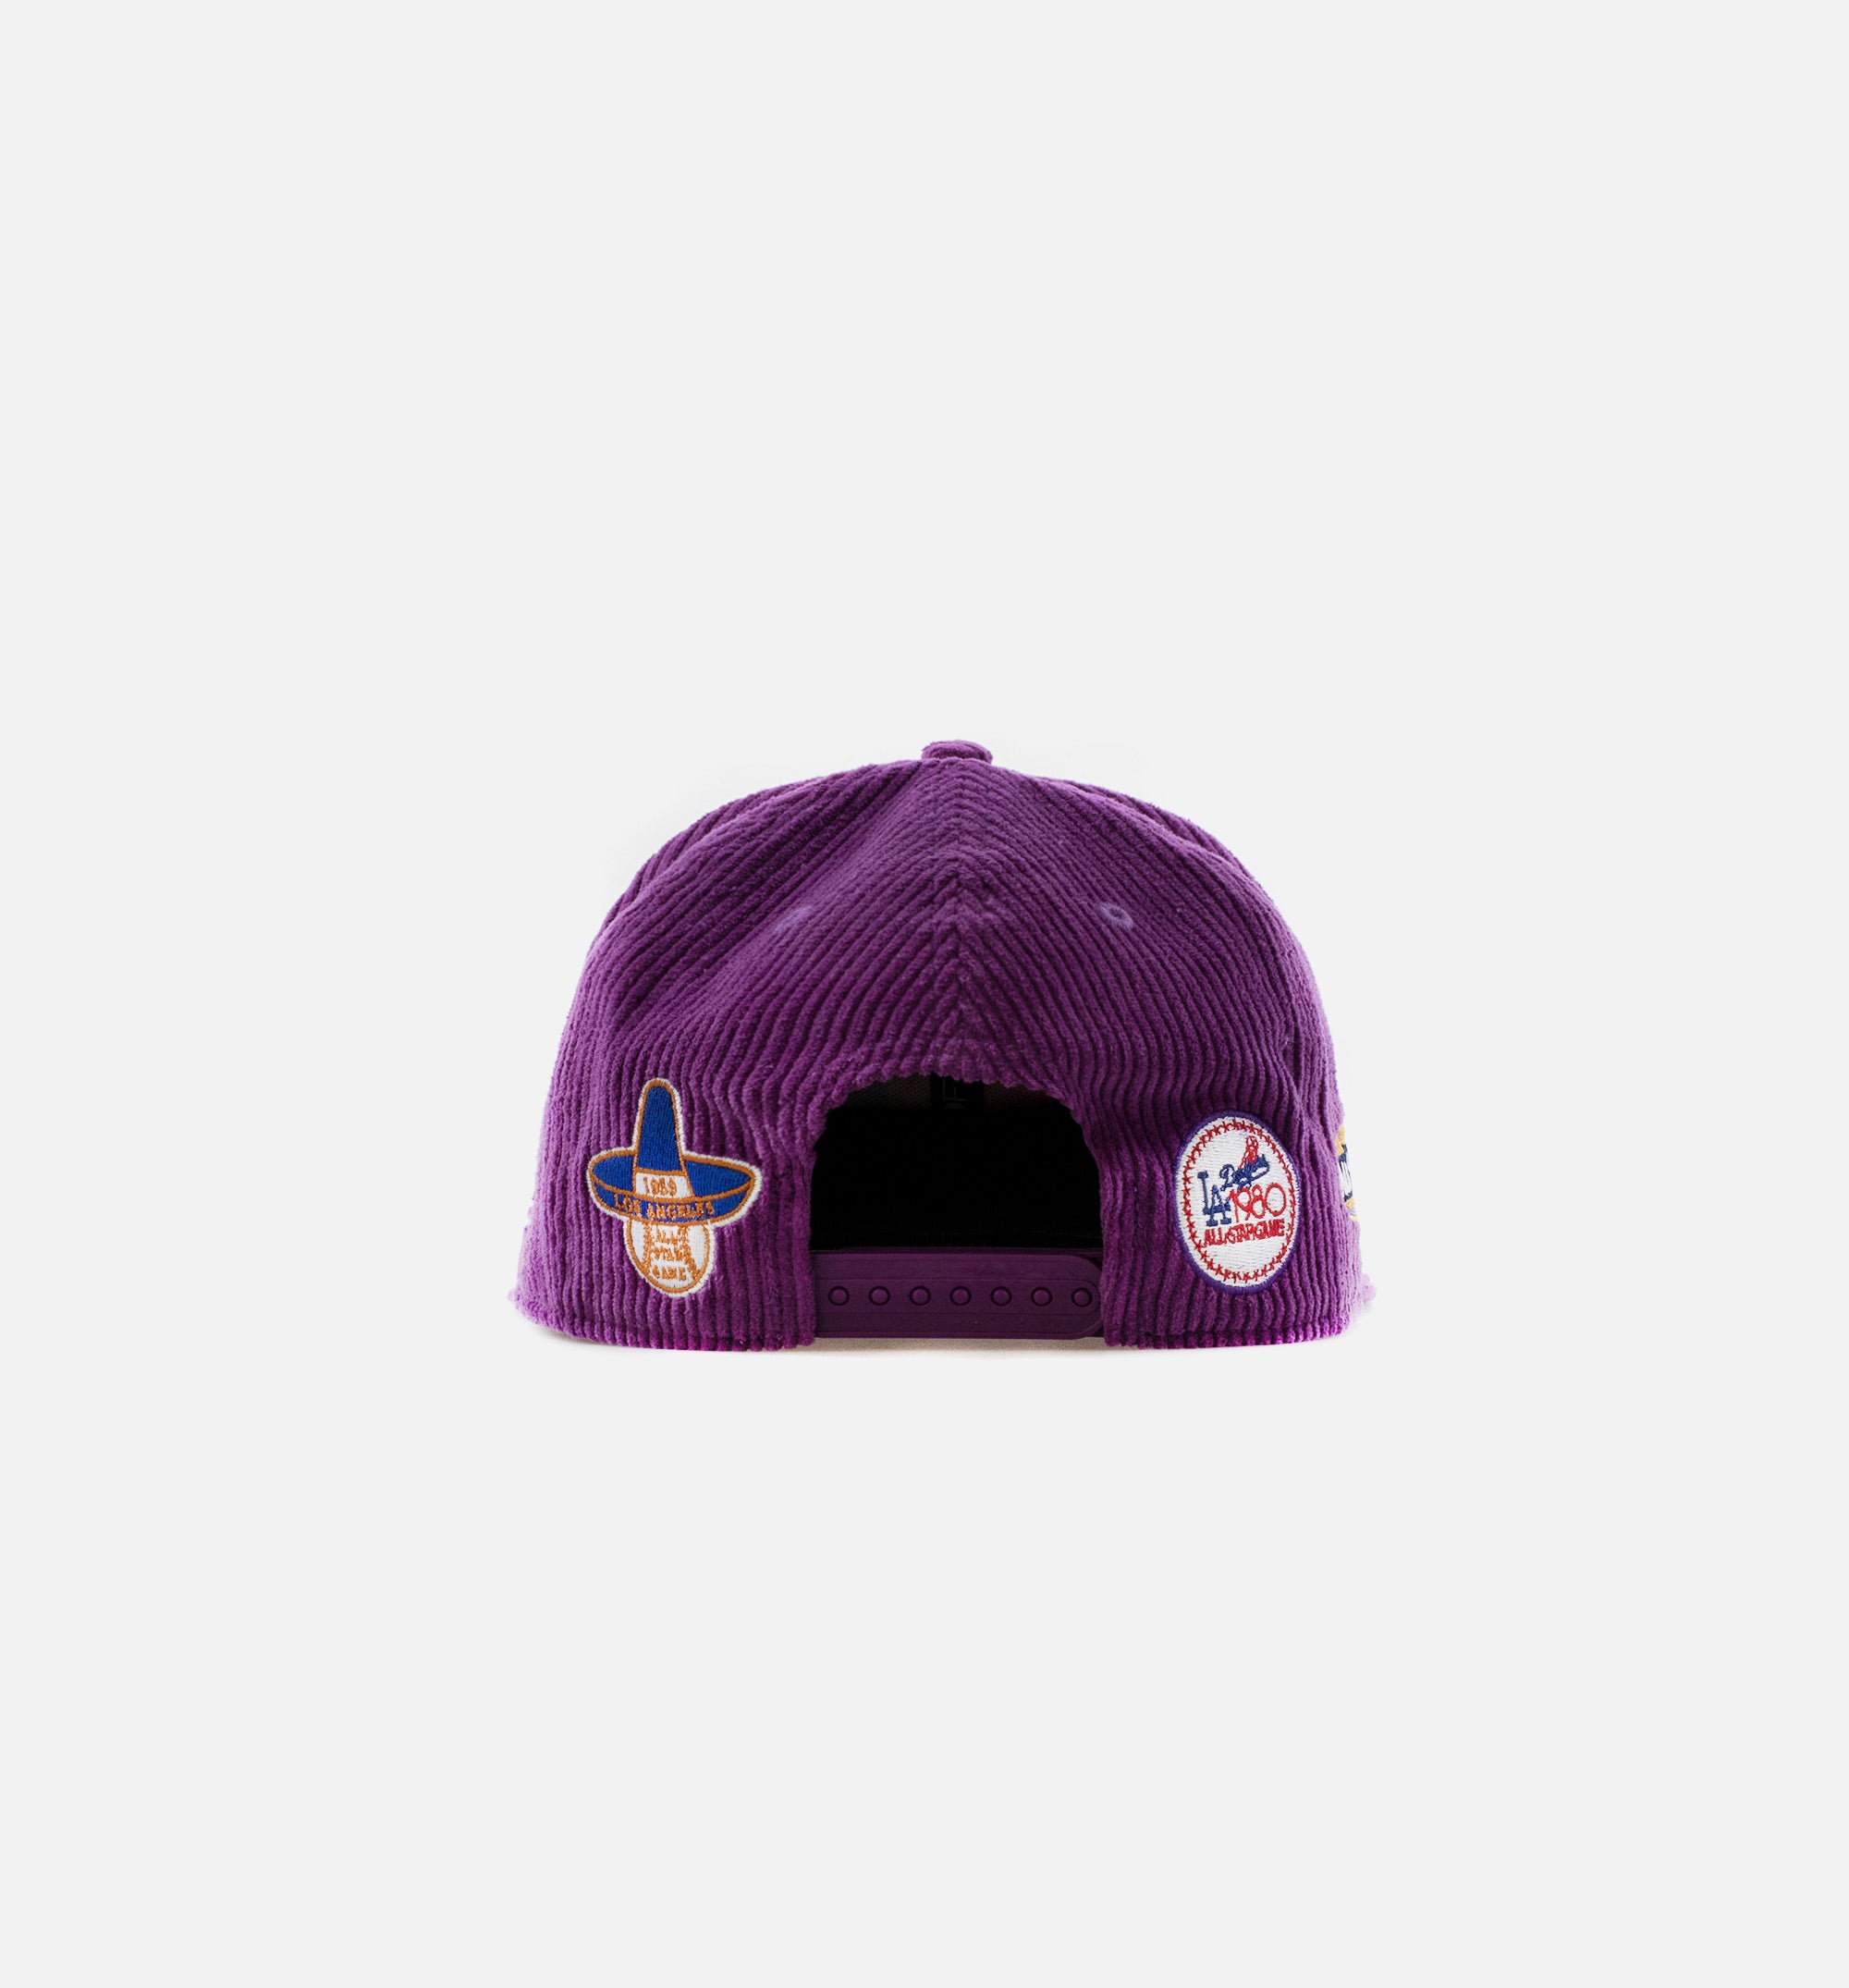 New Era 9FIFTY Los Angeles Dodgers Sunset Adjustable Snapback Hat Black Gradient Orange Purple